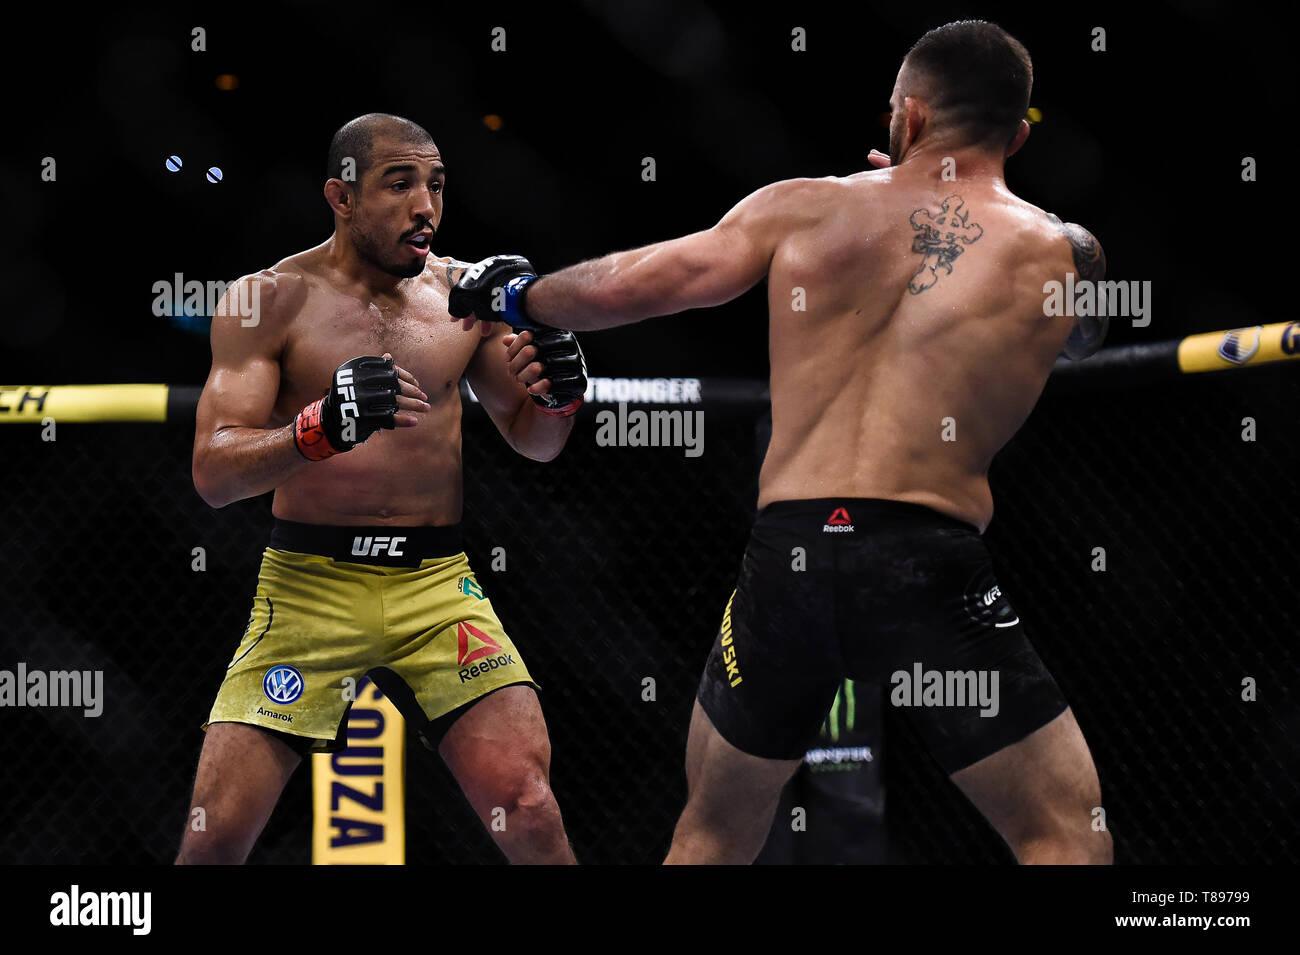 UFC 237: NAMAJUNAS vs. ANDRADE - Fighters Jose Aldo (red glove) and Alexander  Volkanovski (blue glove) during